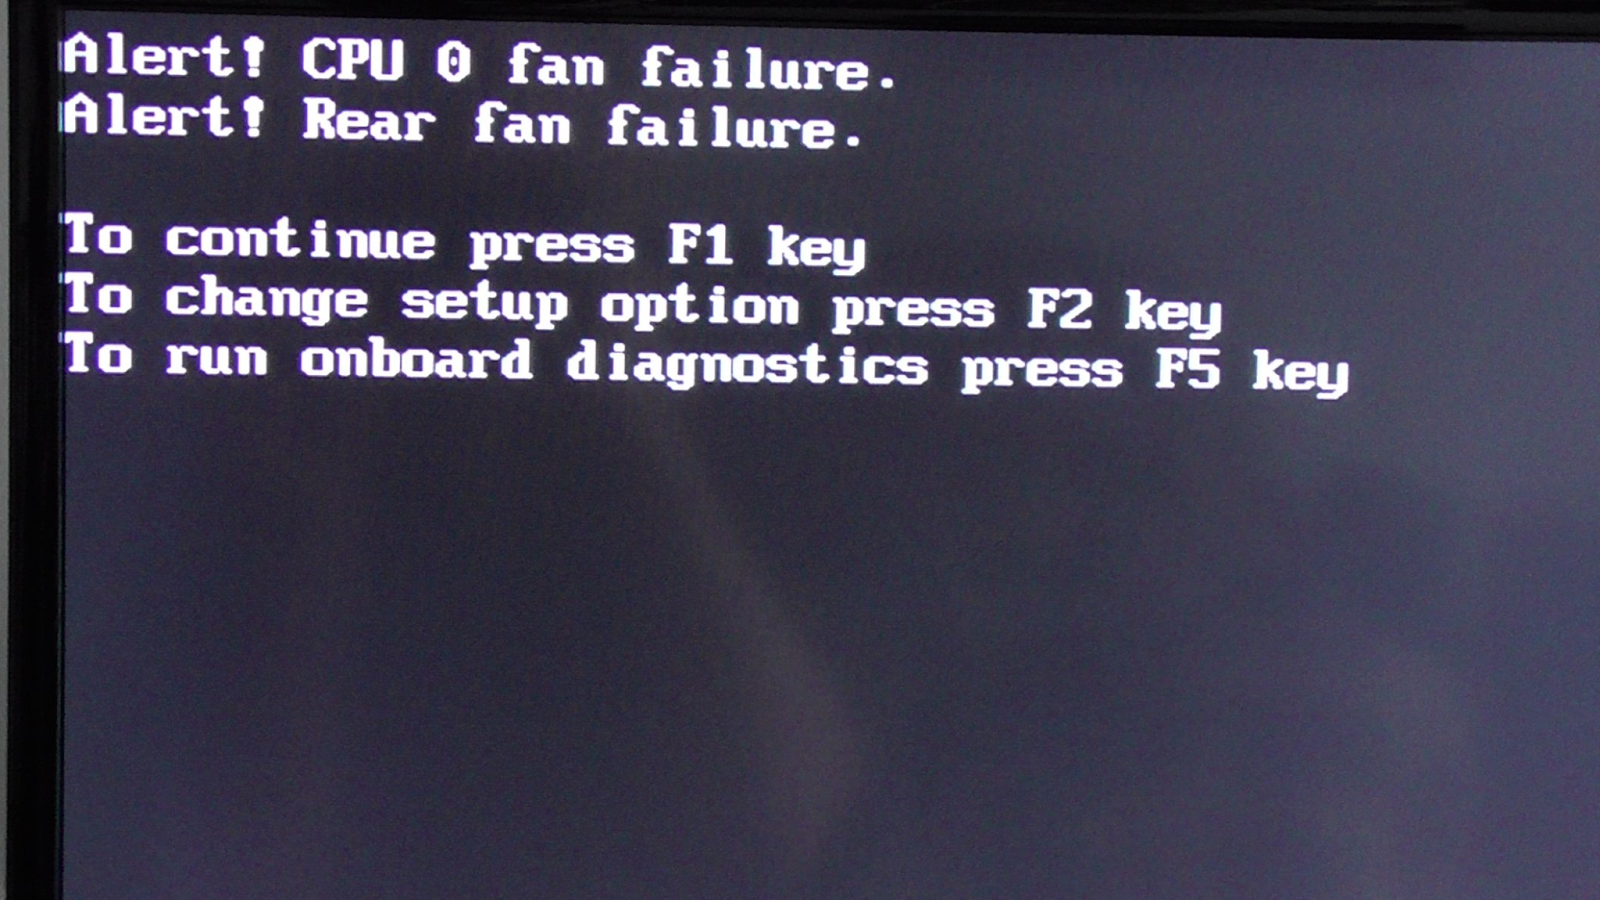 CPU fan error warning